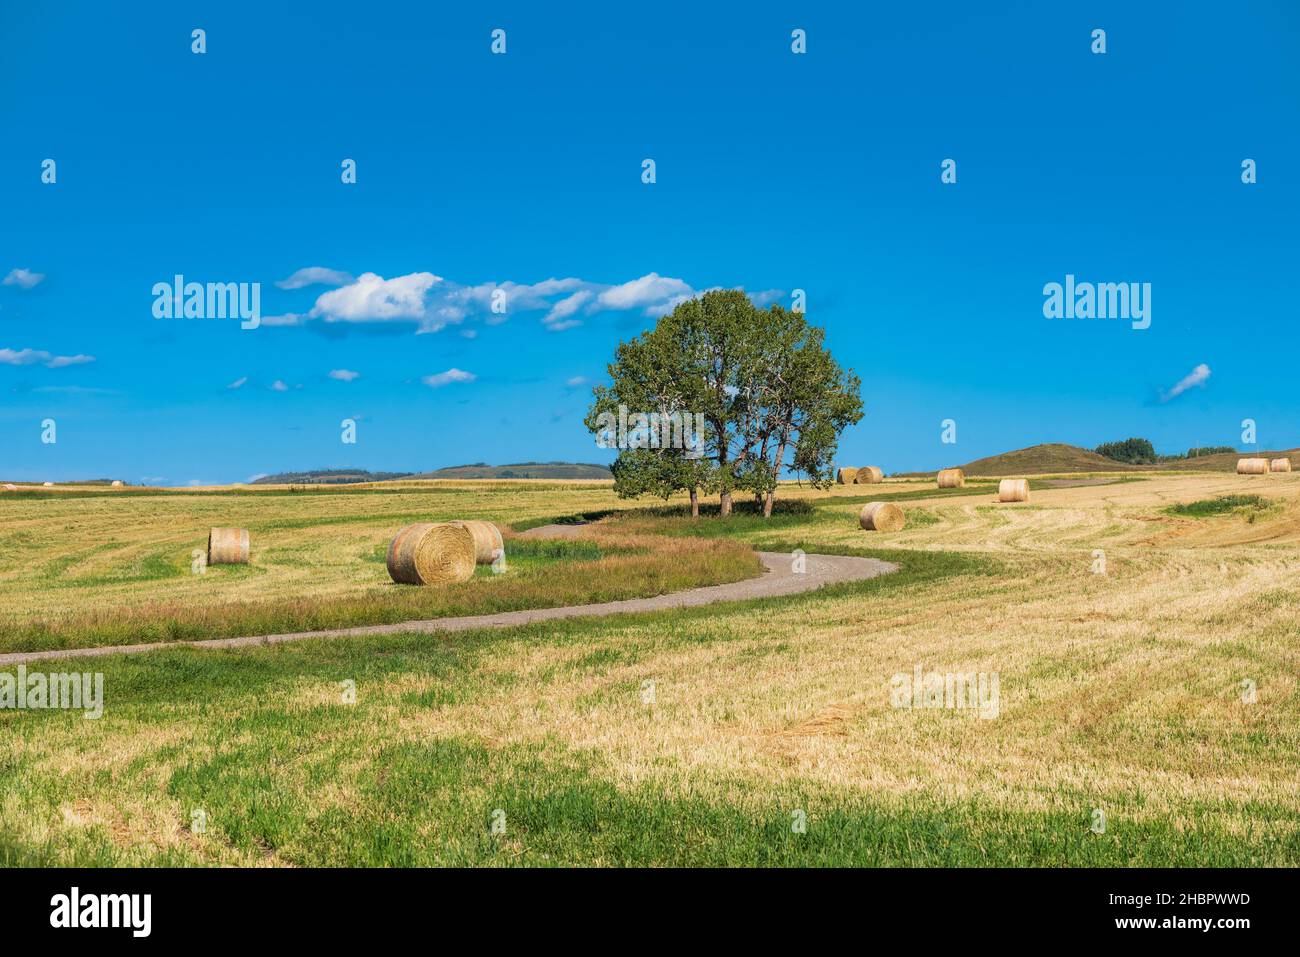 Single tree on a gravel roadway running through scenic farmland in the prairies of Alberta Canada Stock Photo